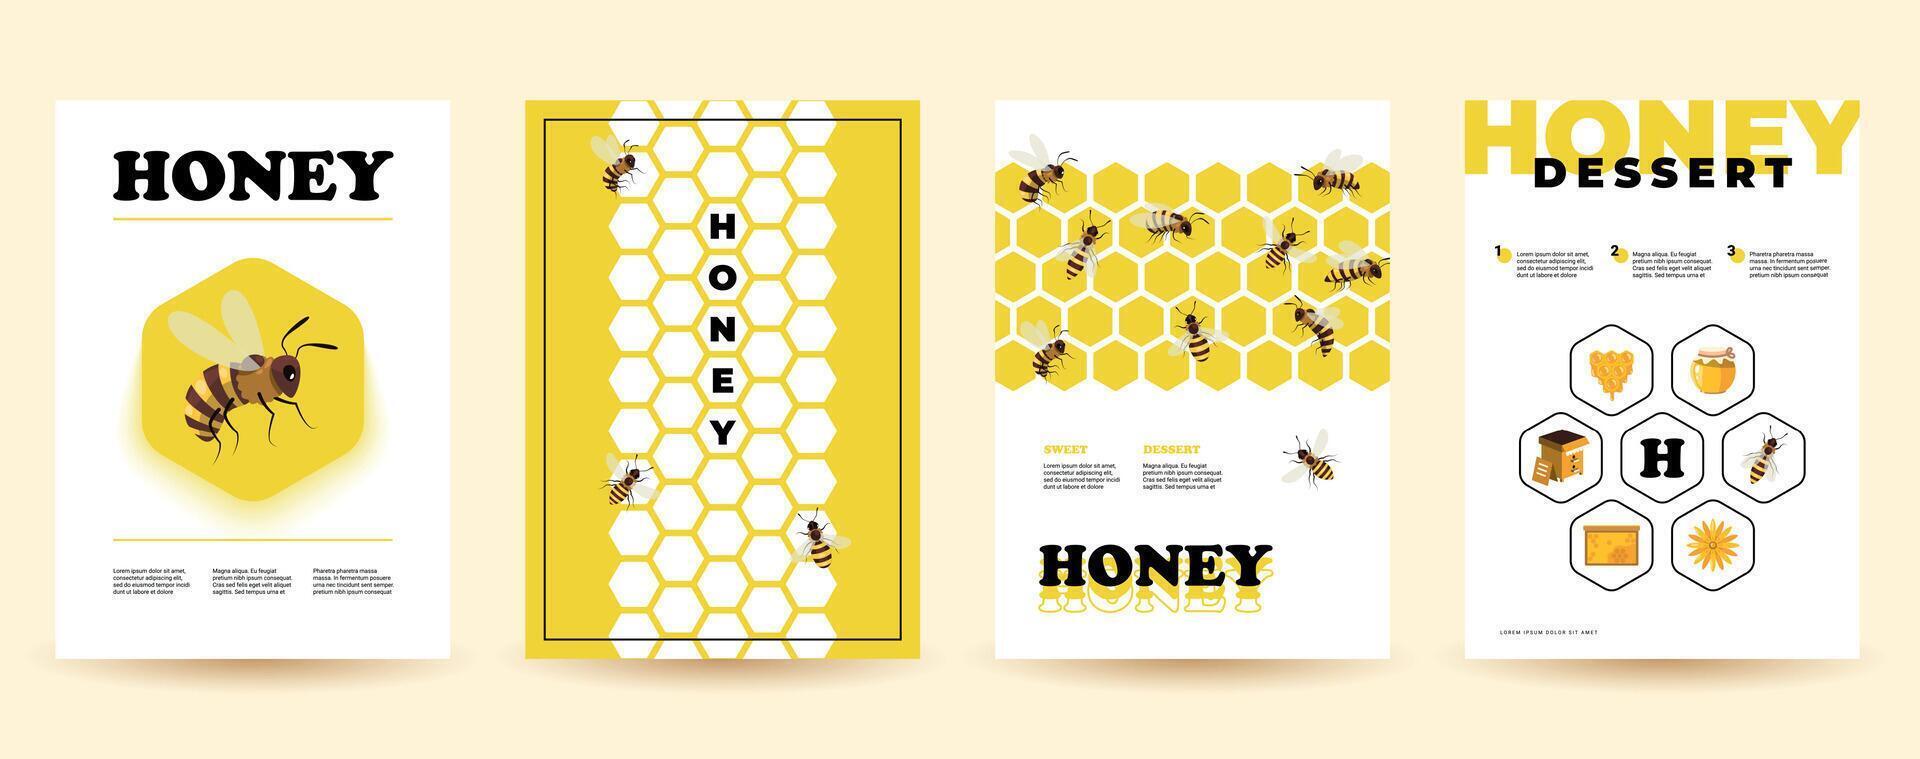 miel volantes dibujos animados carteles con abeja insecto panal Colmena, natural orgánico apicultura producto elementos para marca diseño. vector conjunto